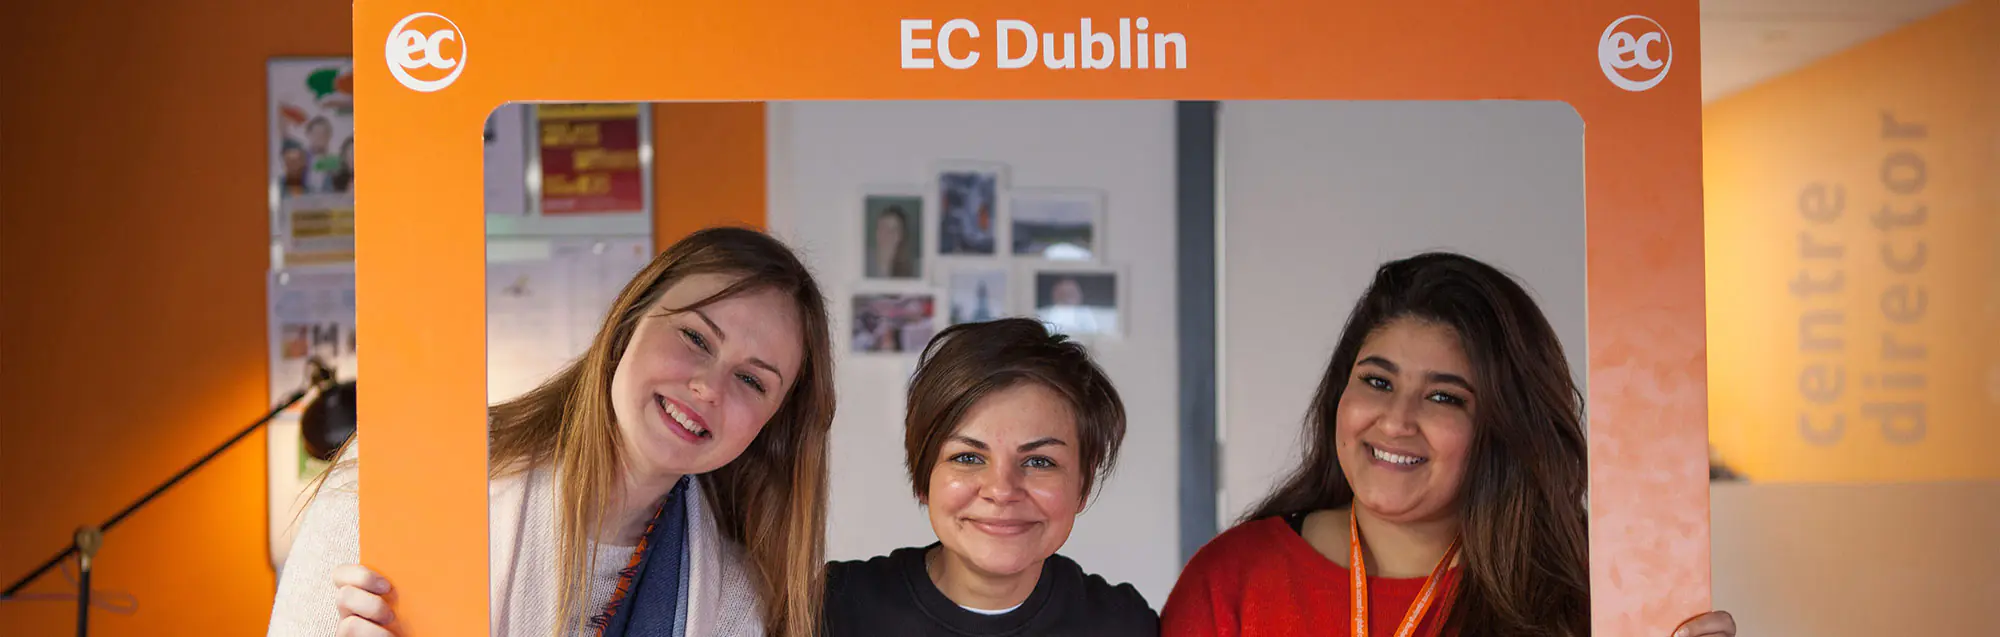 Programas inglés + trabajo remunerado de EC Dublin 30plus